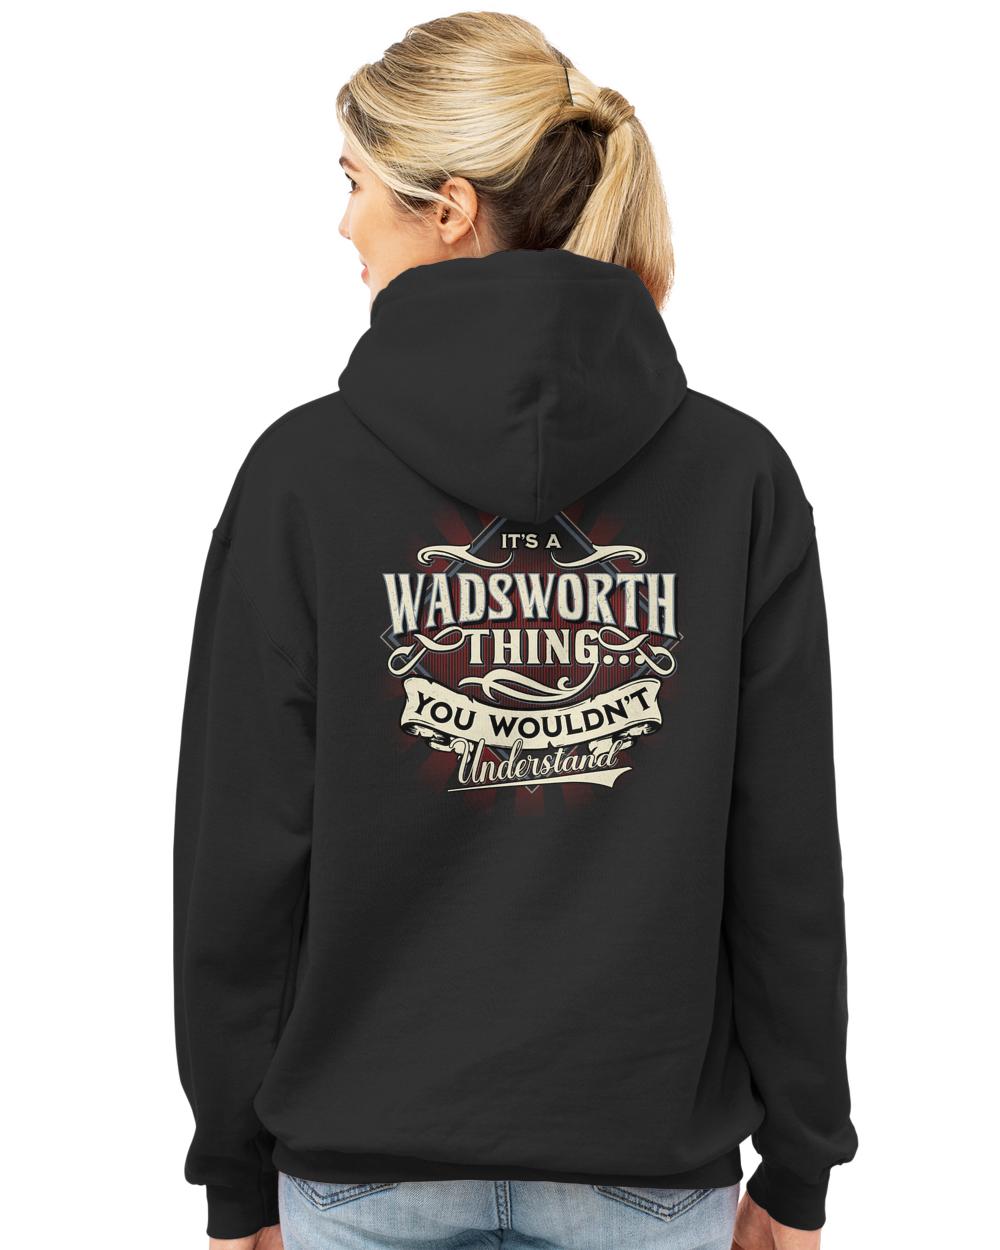 WADSWORTH-13K-44-01